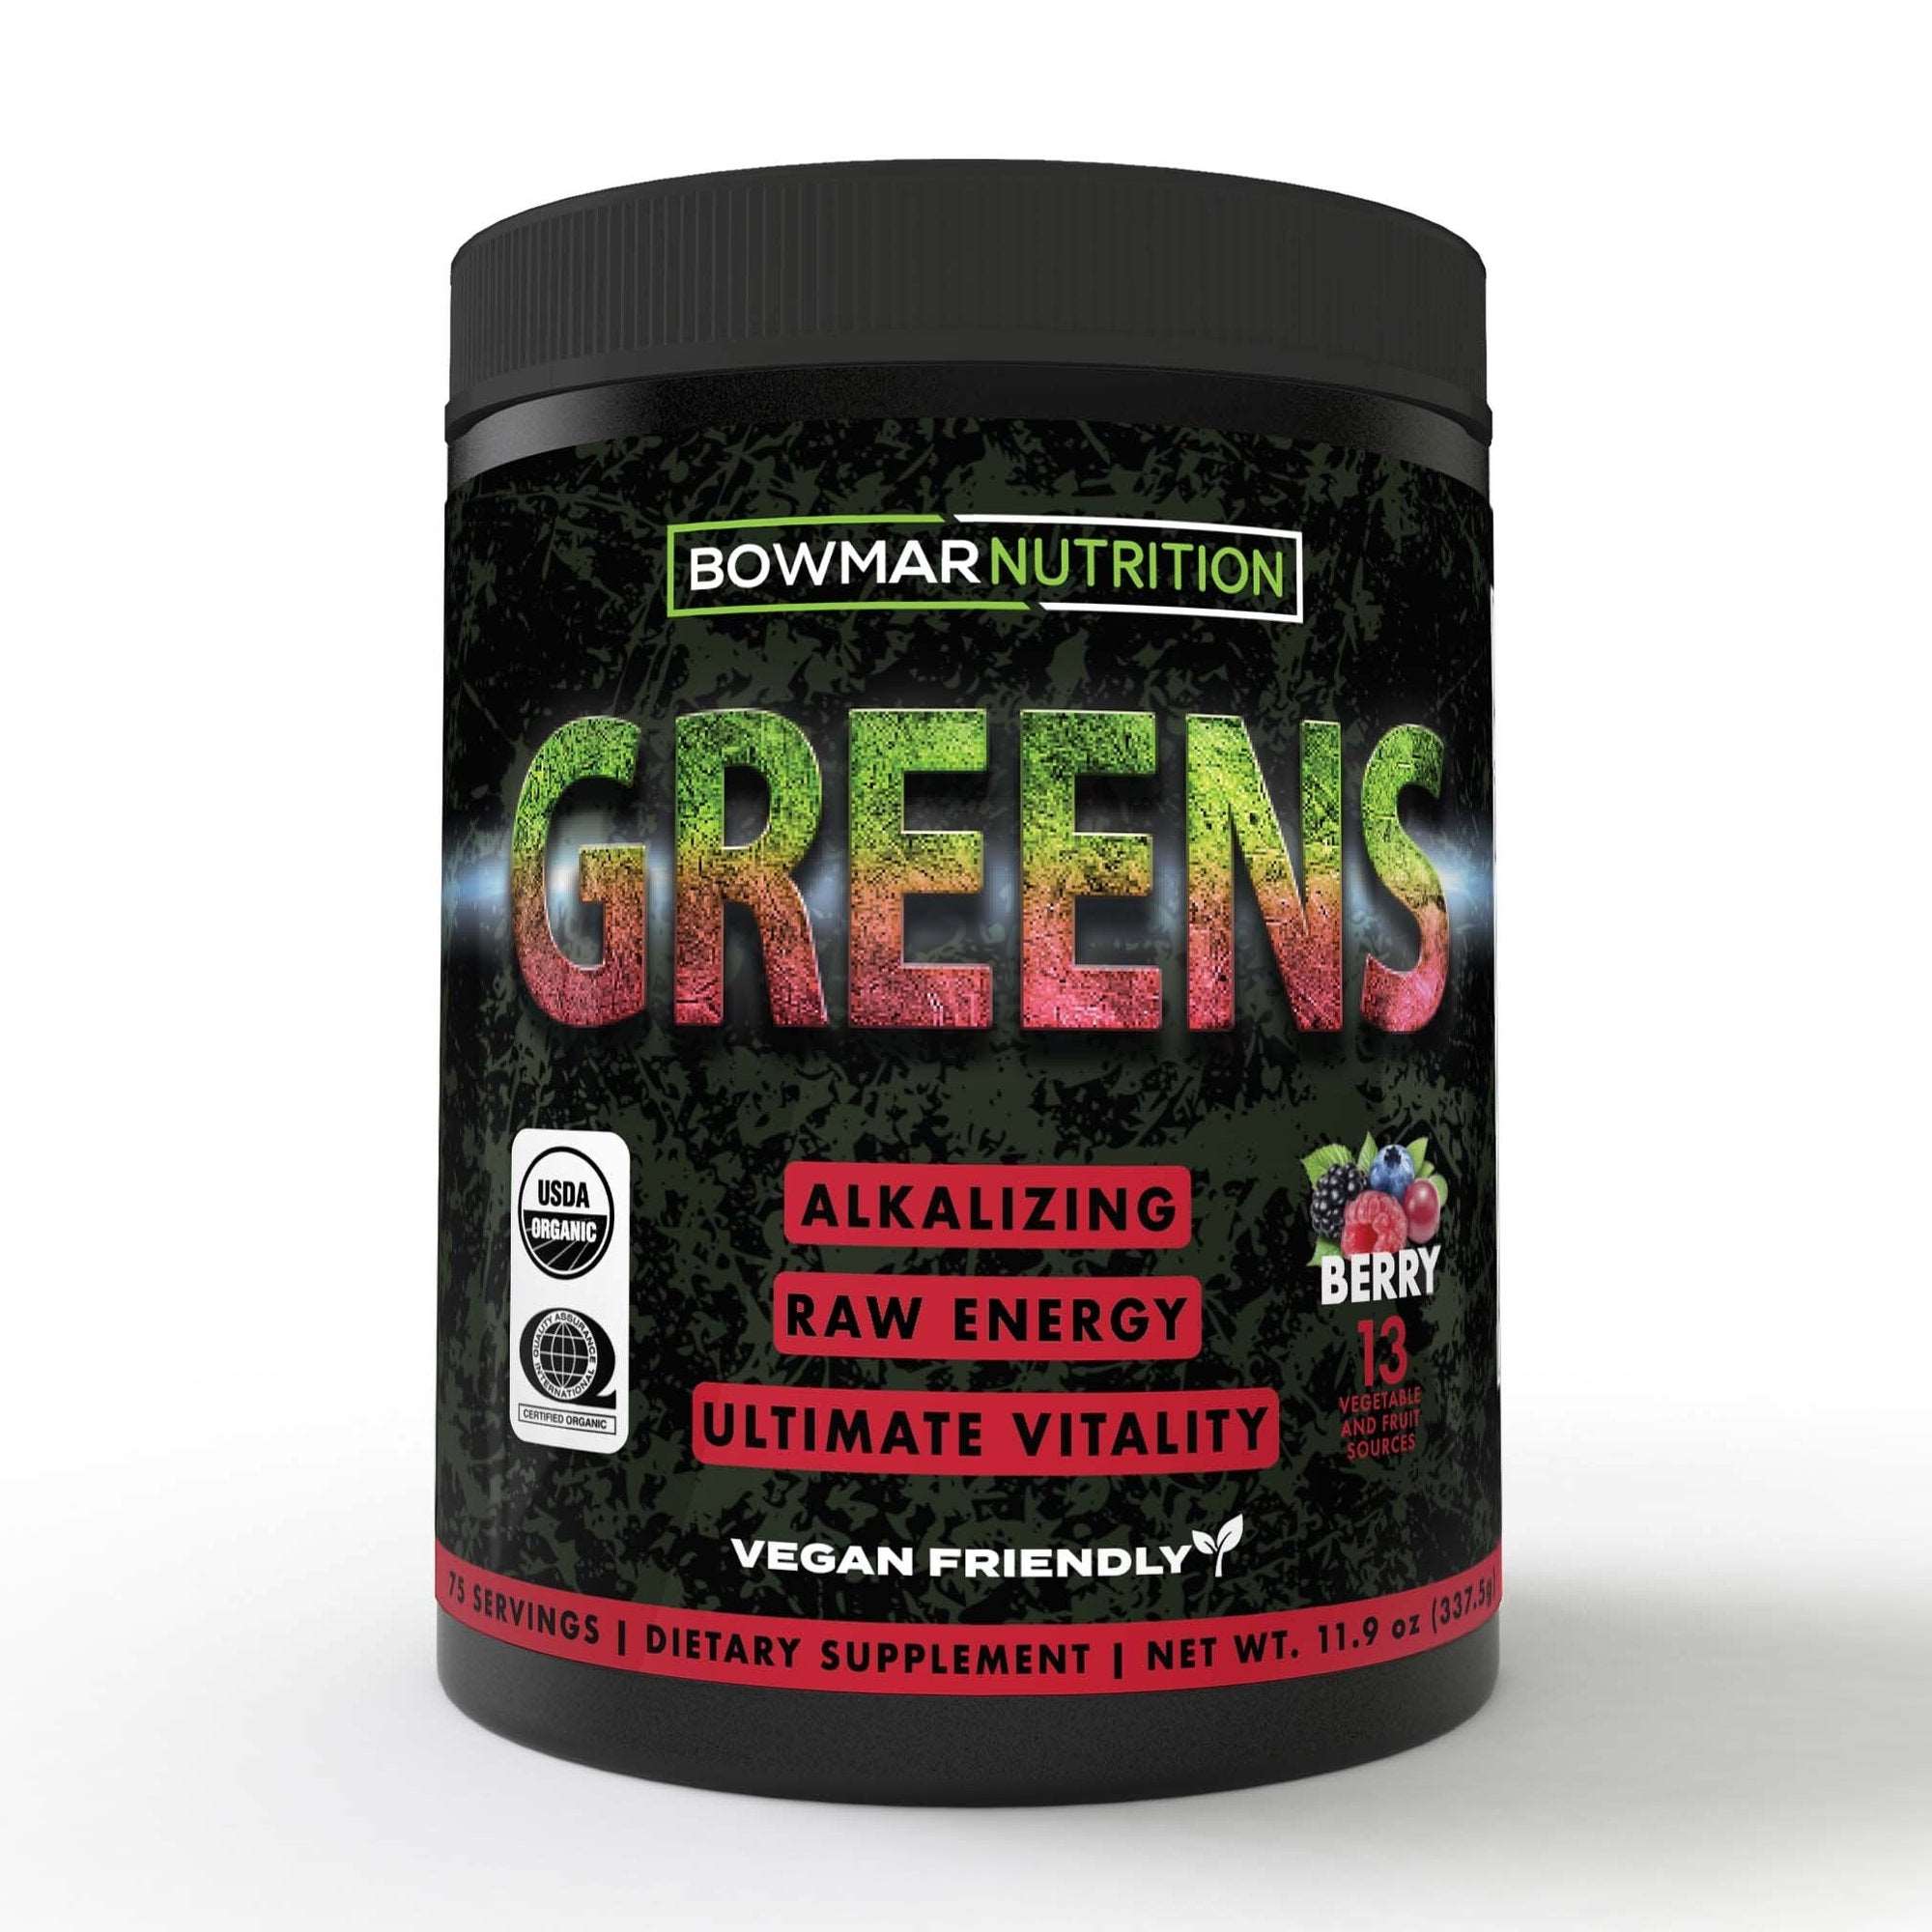 Bowmar Nutrition Greens (75 servings) Greens Berry bowmar bowmar-nutrition-greens